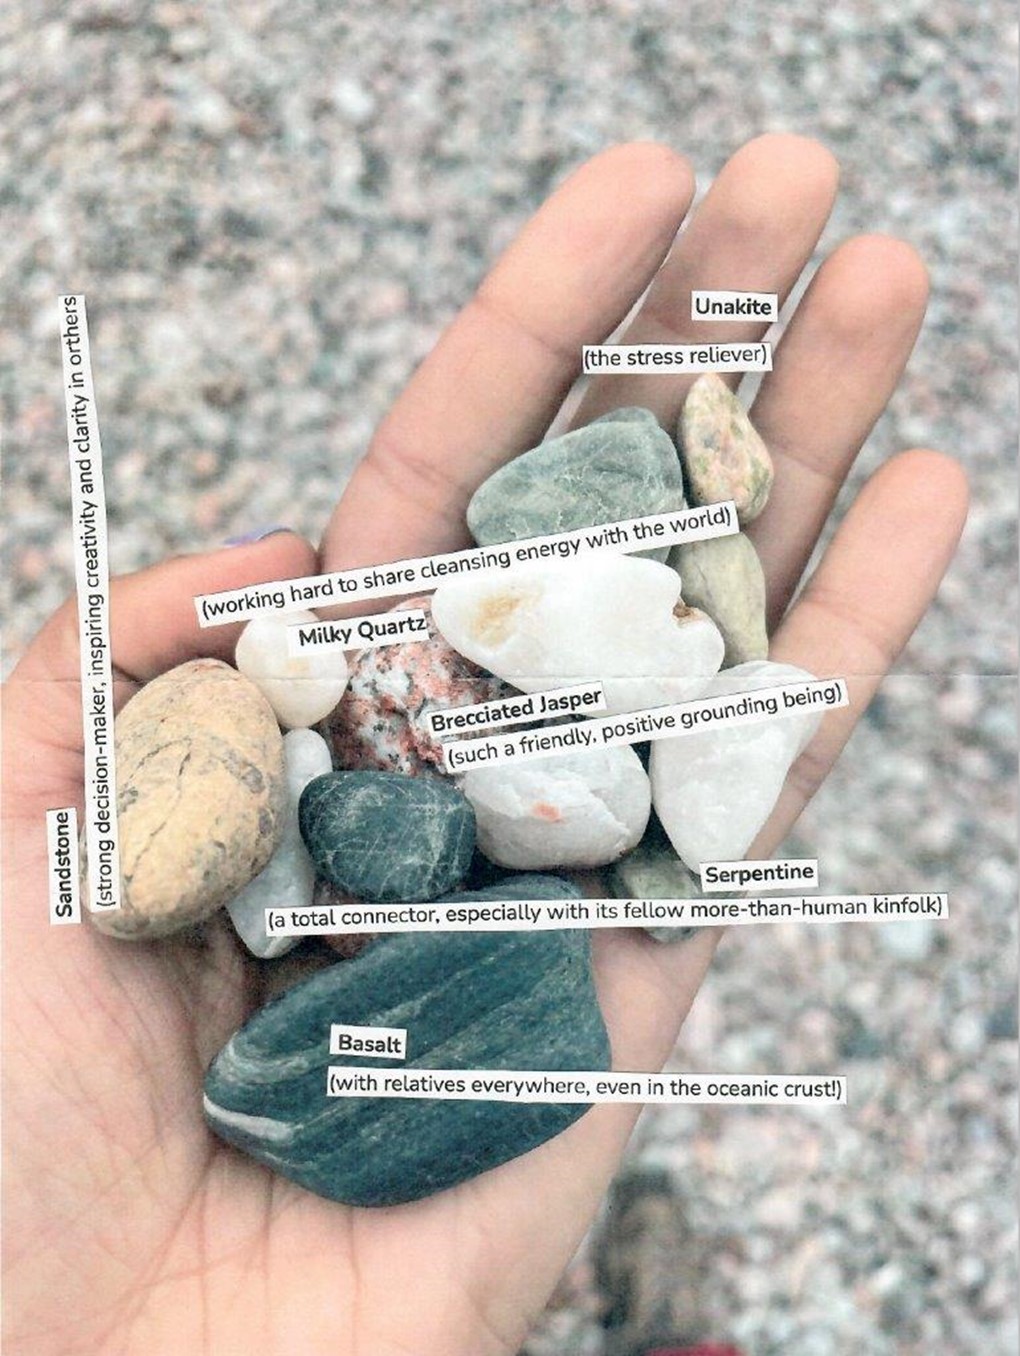 hand holding rocks